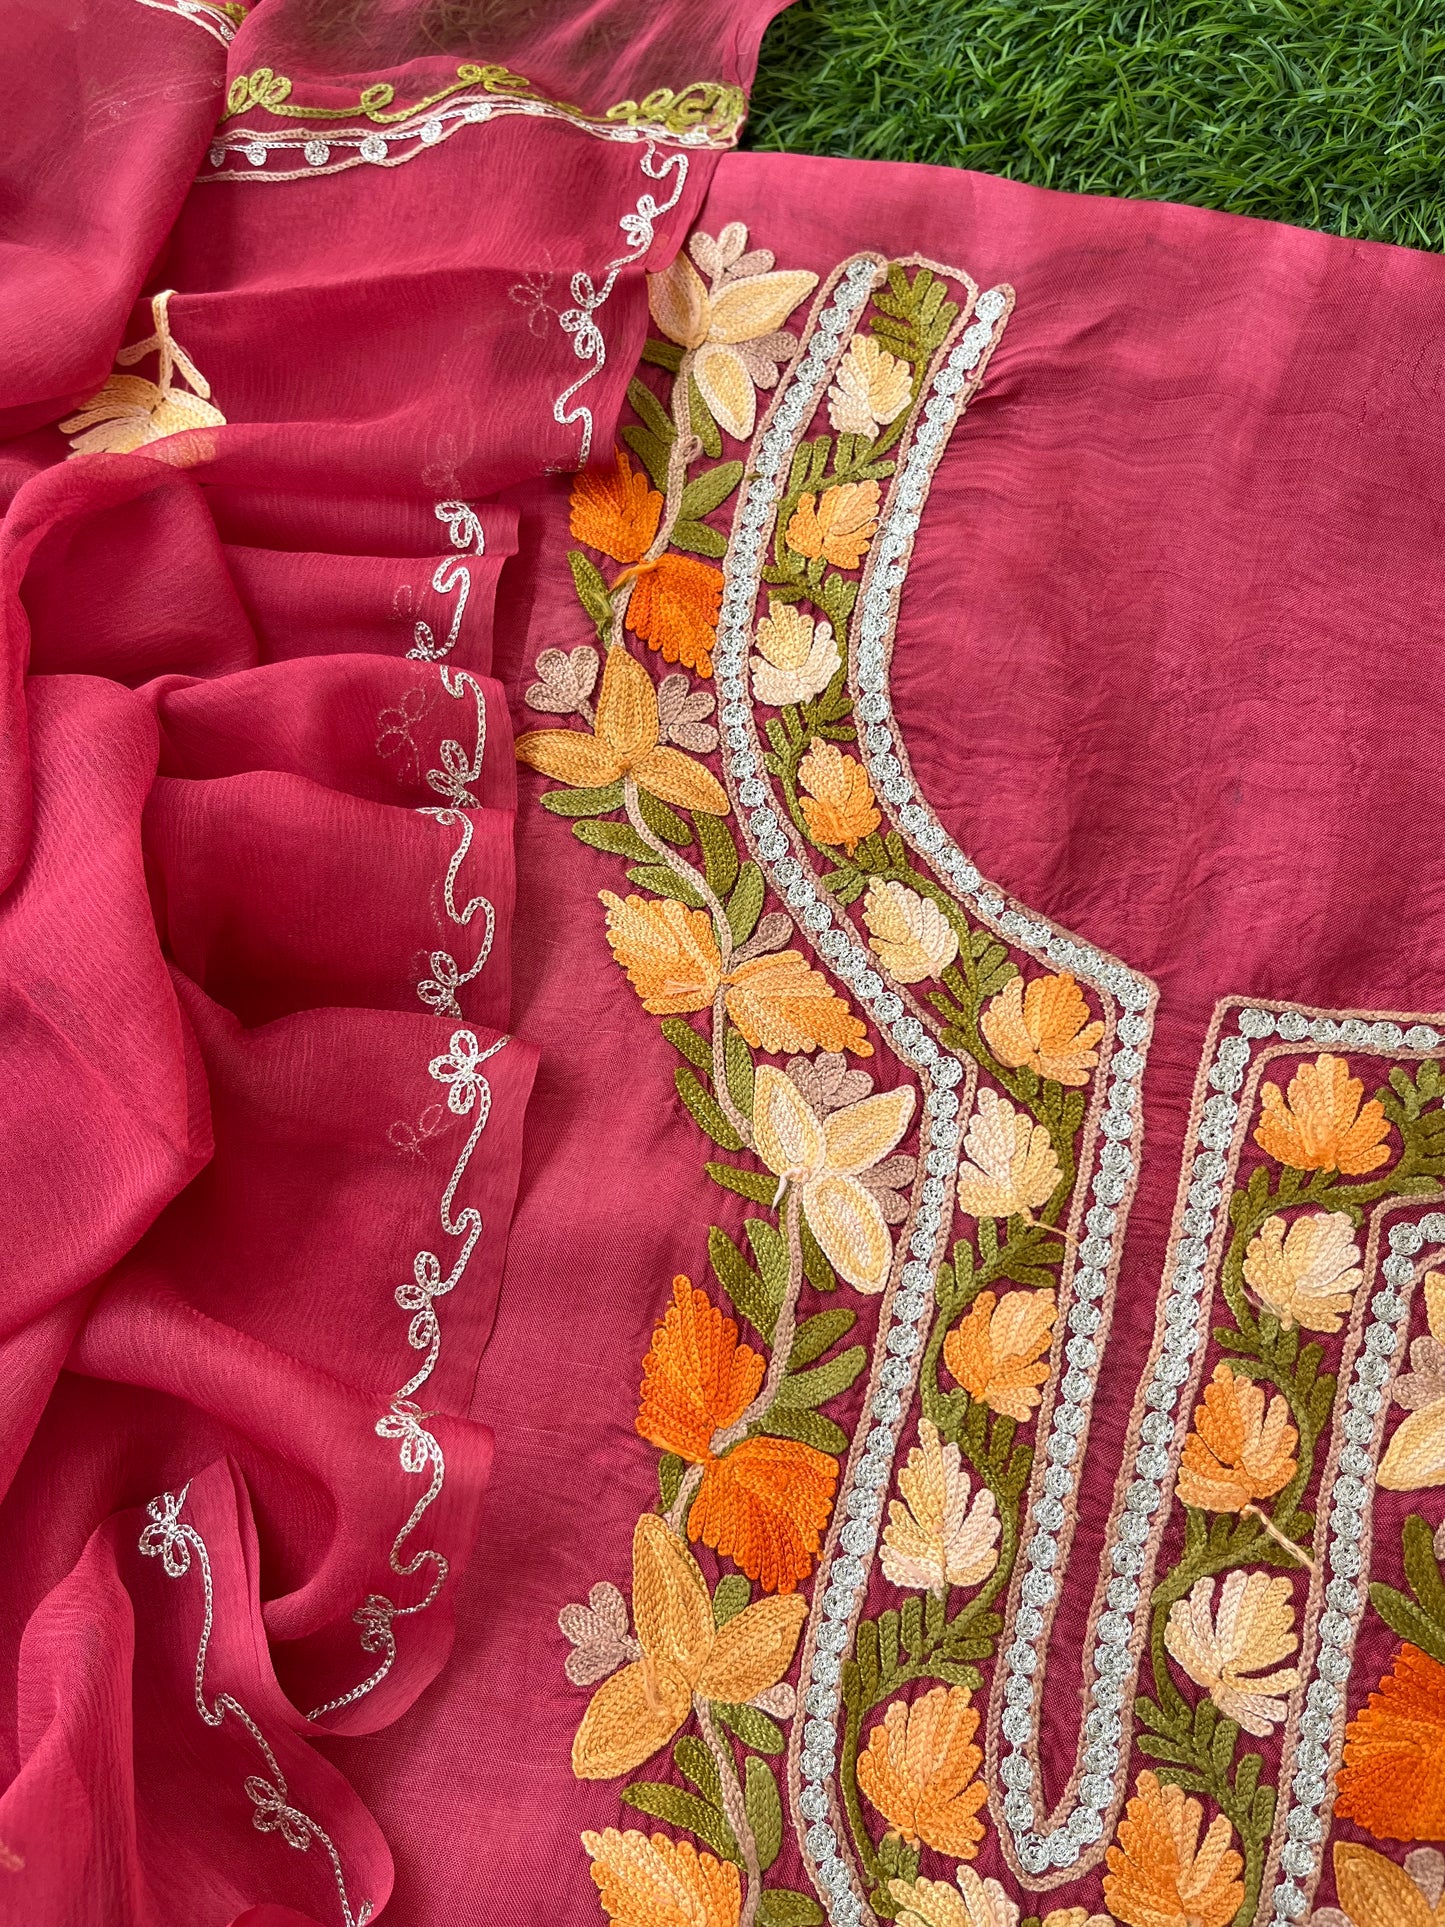 Blush Pink Opada Silk Aari Embroidered Suit material